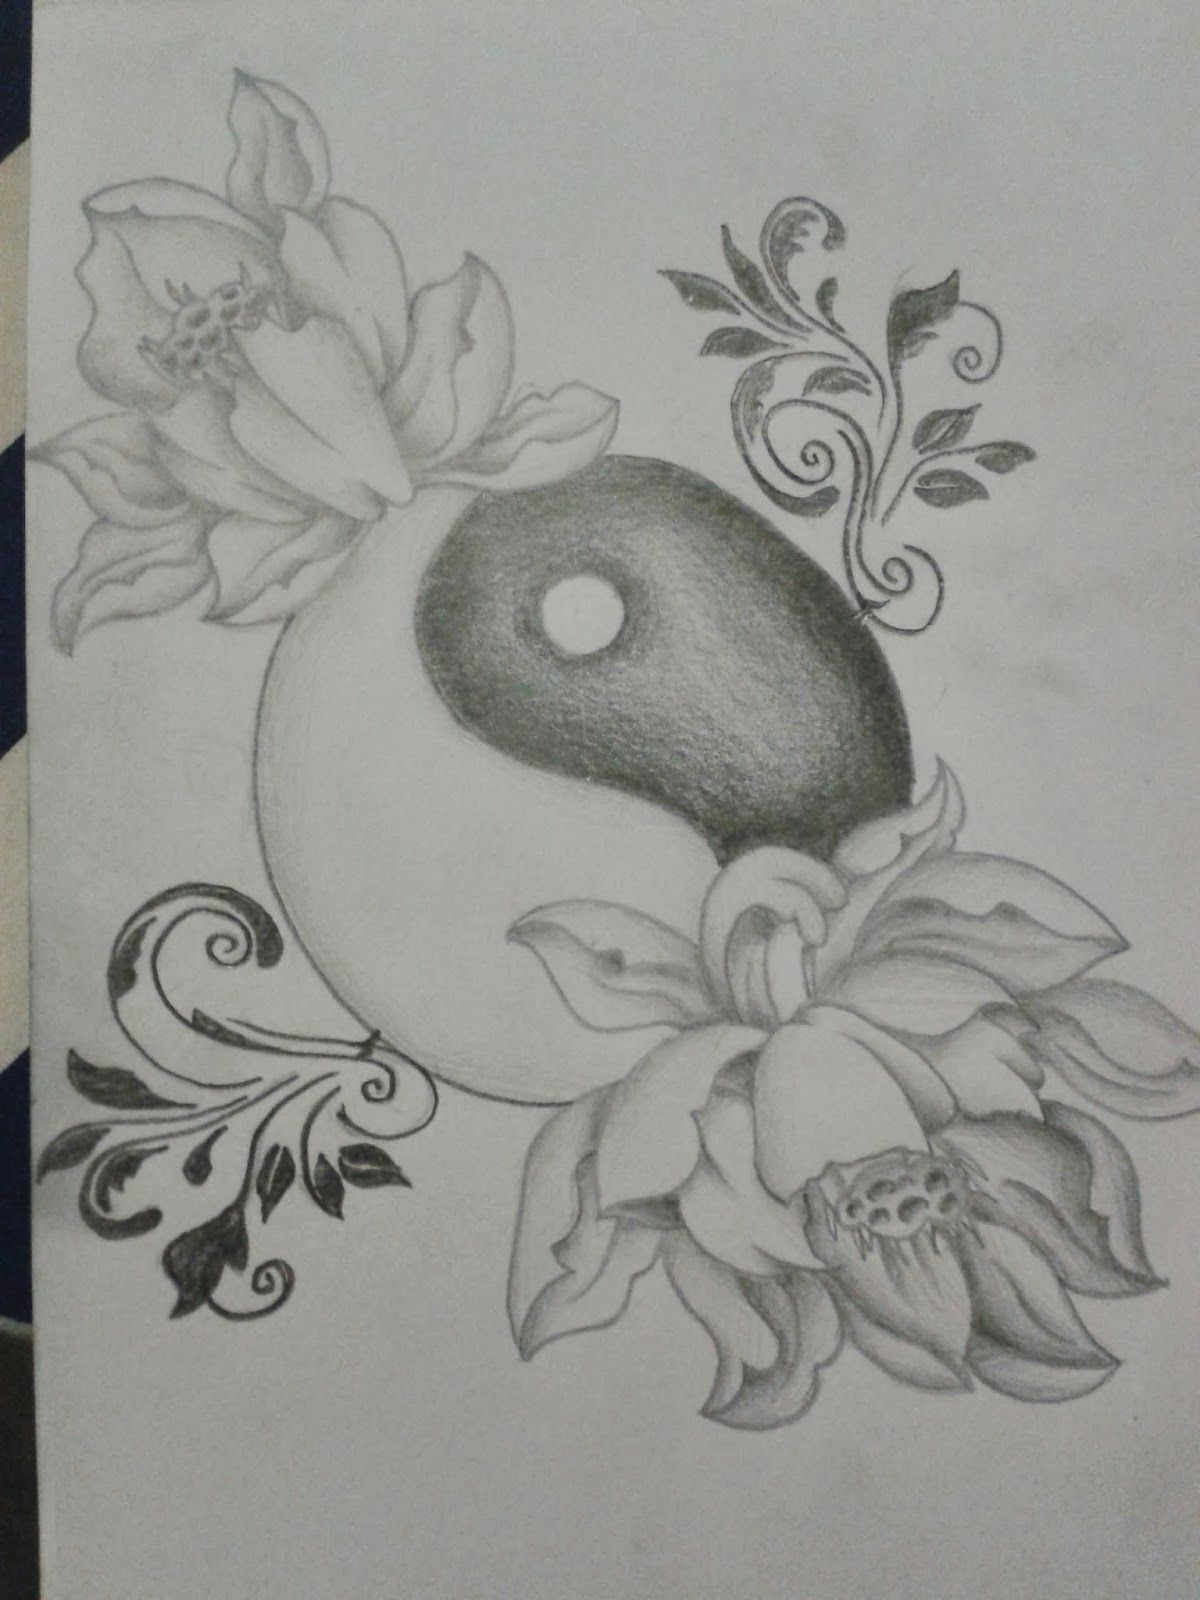 Easy Yin Yang Drawings R3dwall Art Lotus Flower Yin Yang Tattoo Design Tattoo S